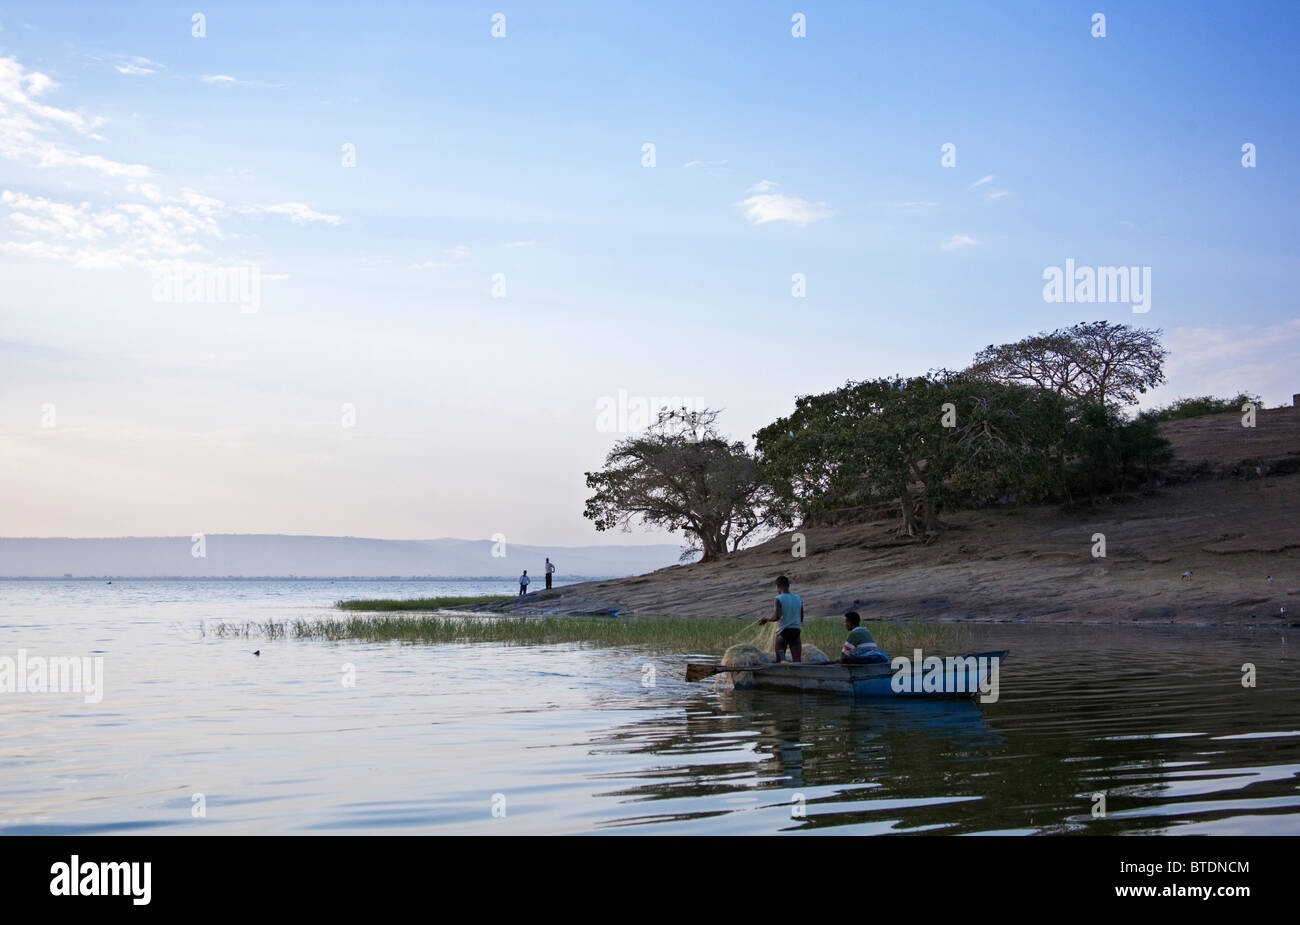 Vista panorámica del lago Awassa con pescadores la pesca con red desde un barco azul Foto de stock